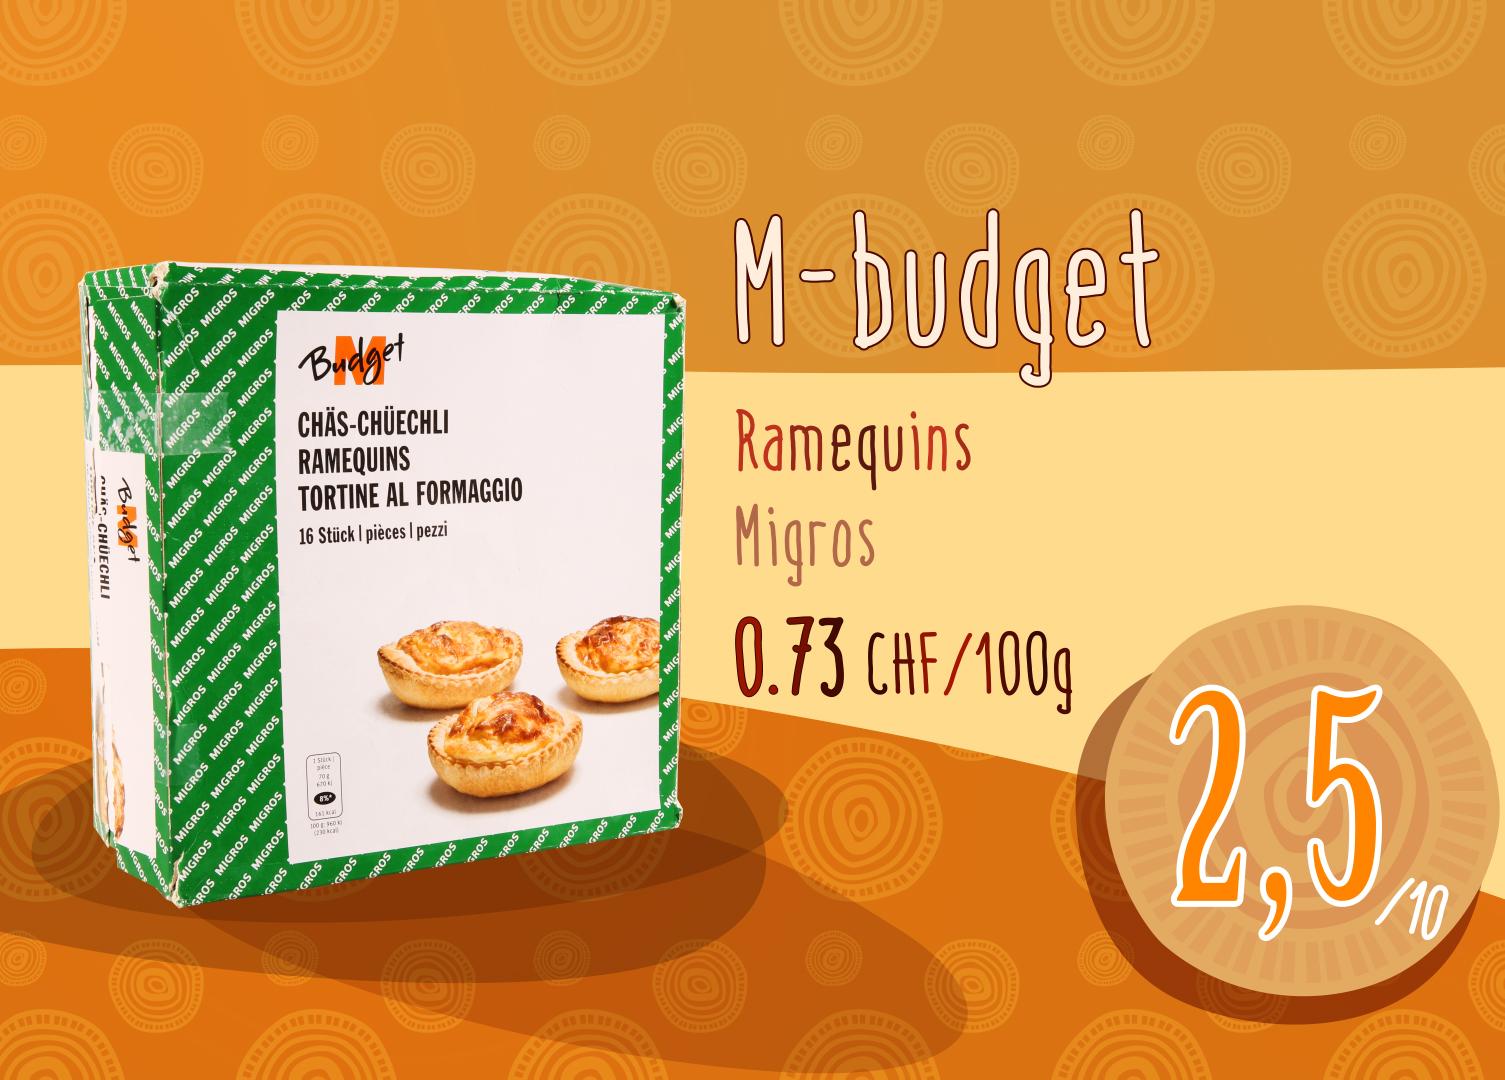 Ramequins M-budget - Migros.